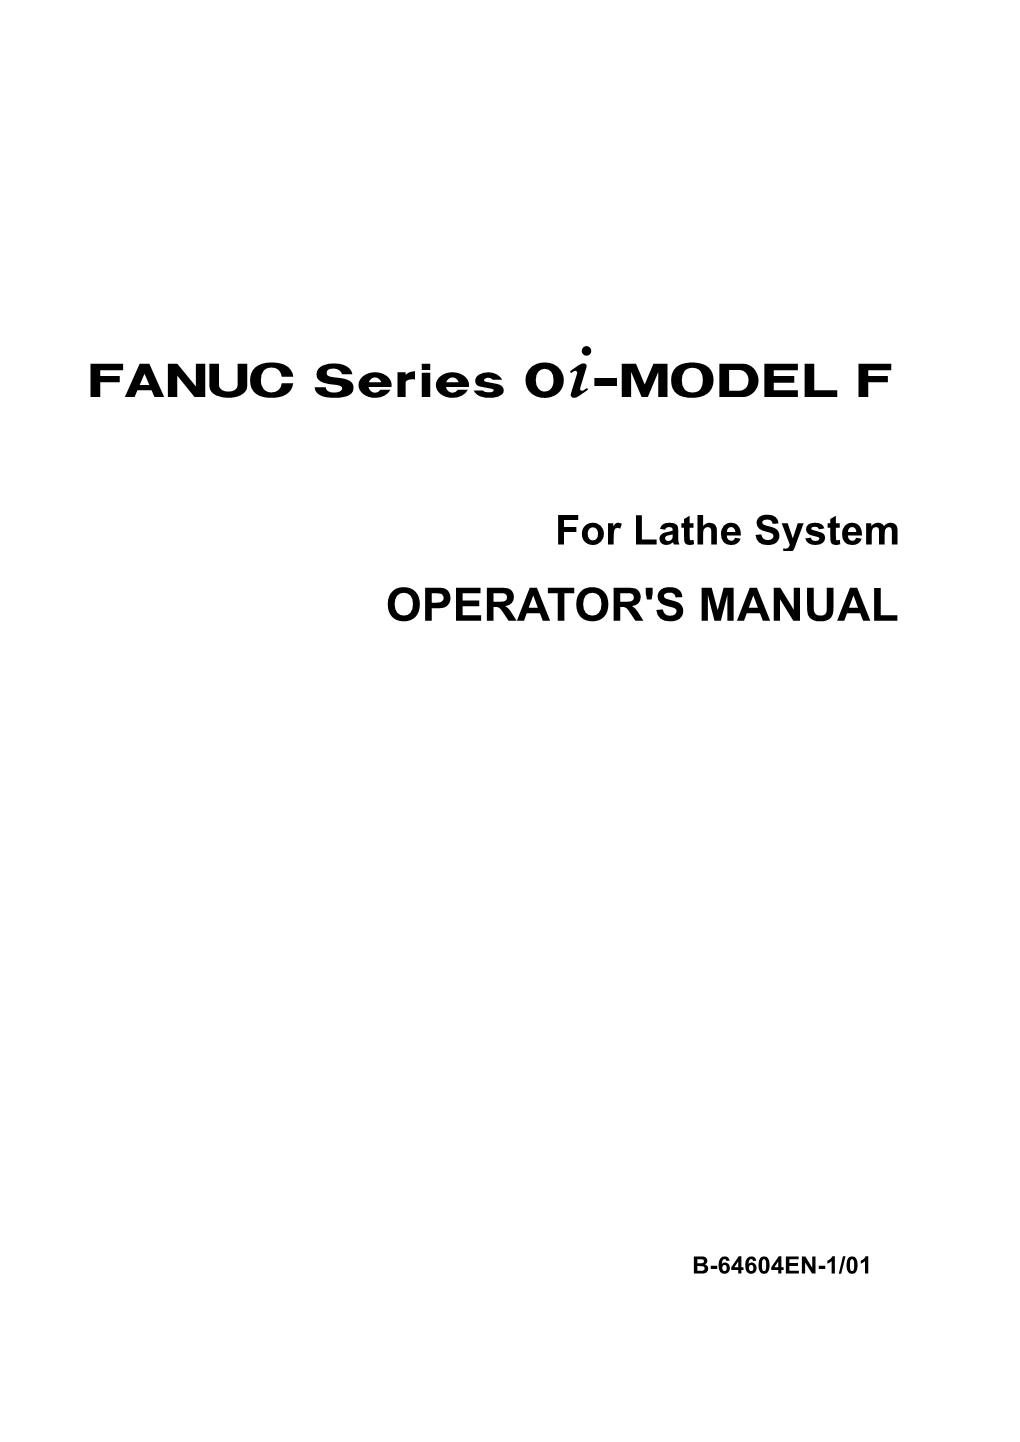 FANUC Series 0I-MODEL F for Lathe System OPERATOR's MANUAL